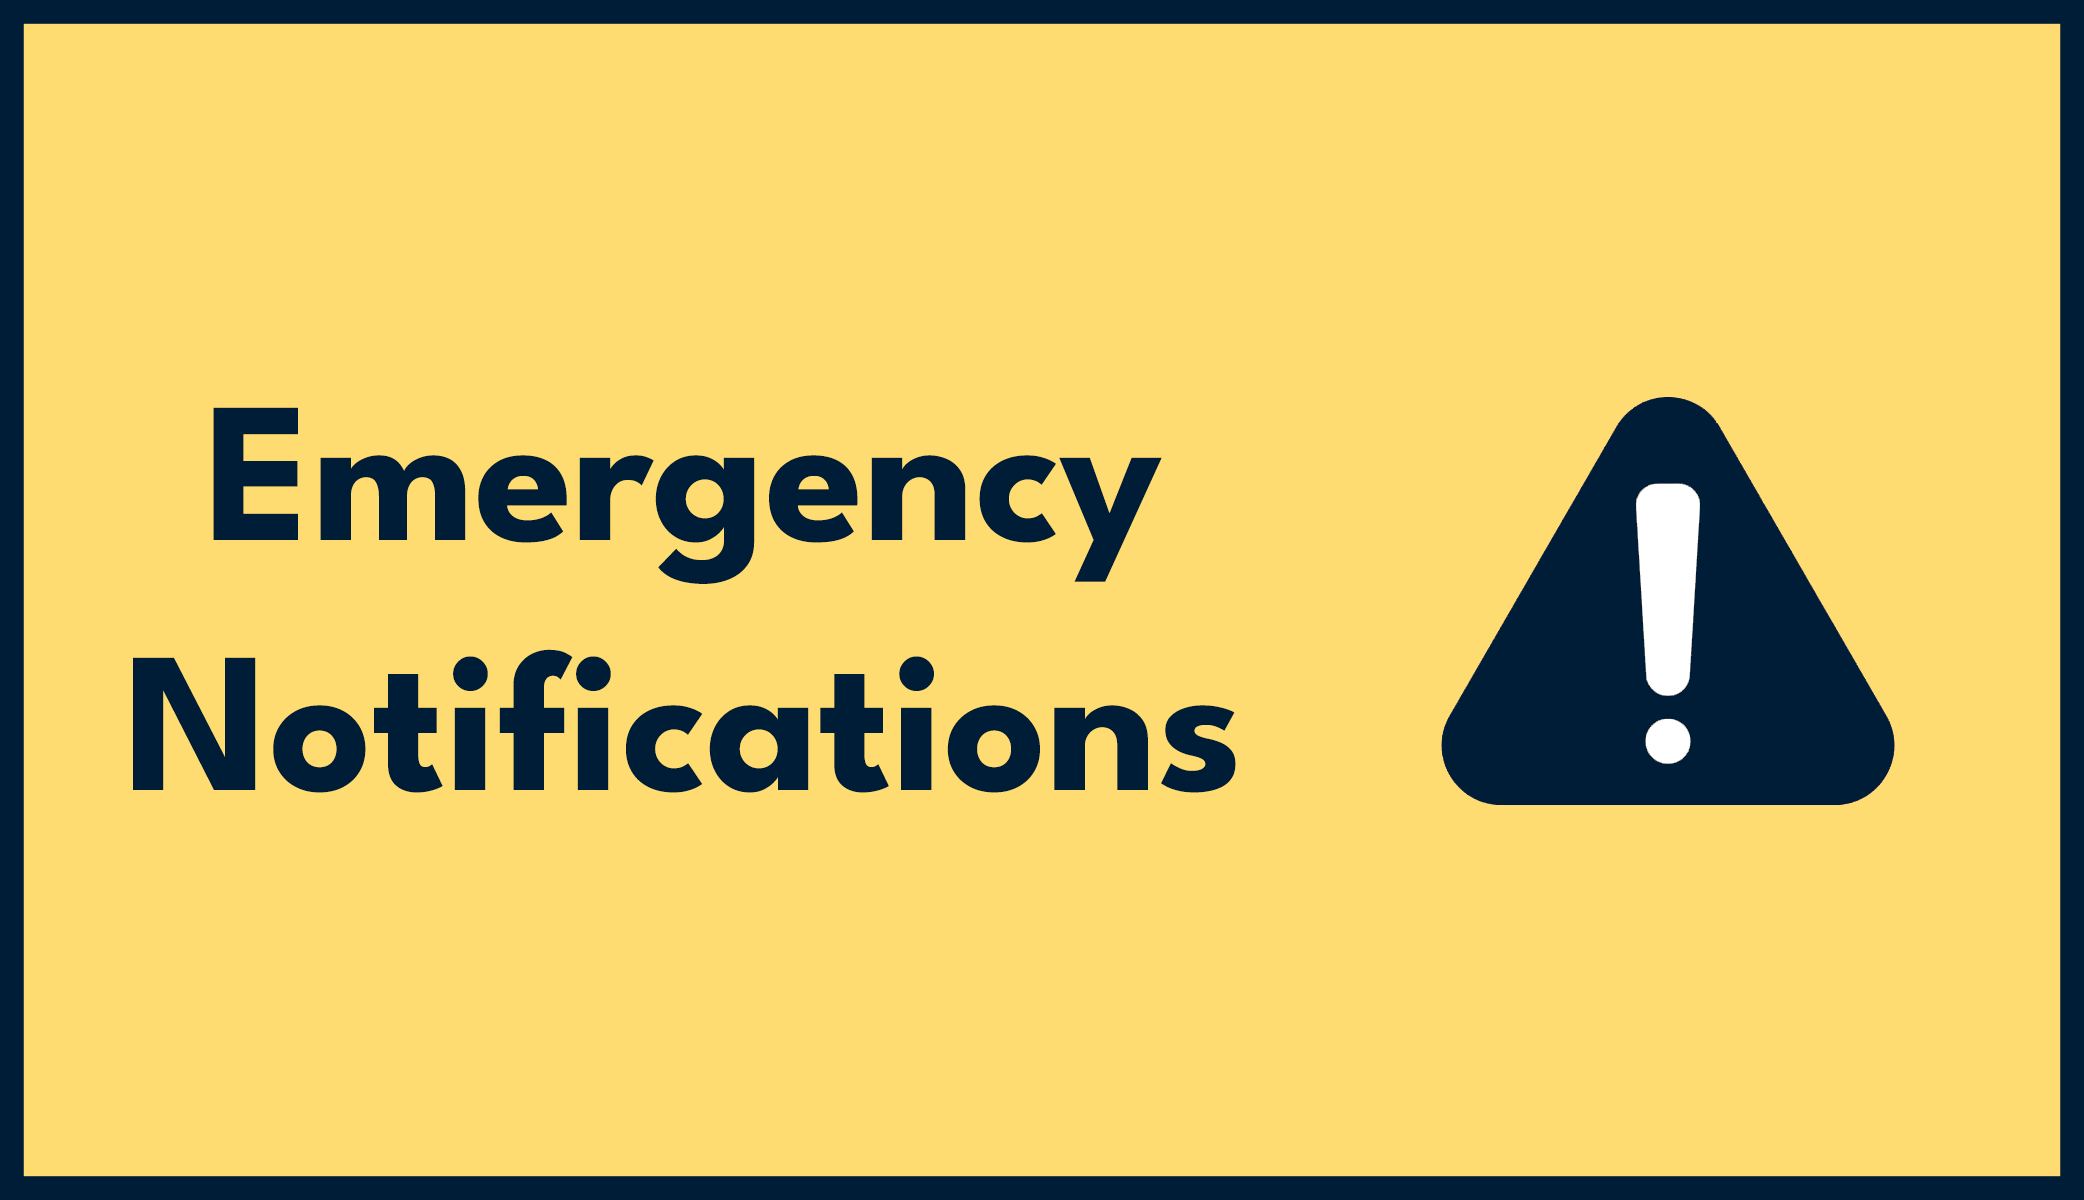 Emergency Notifications